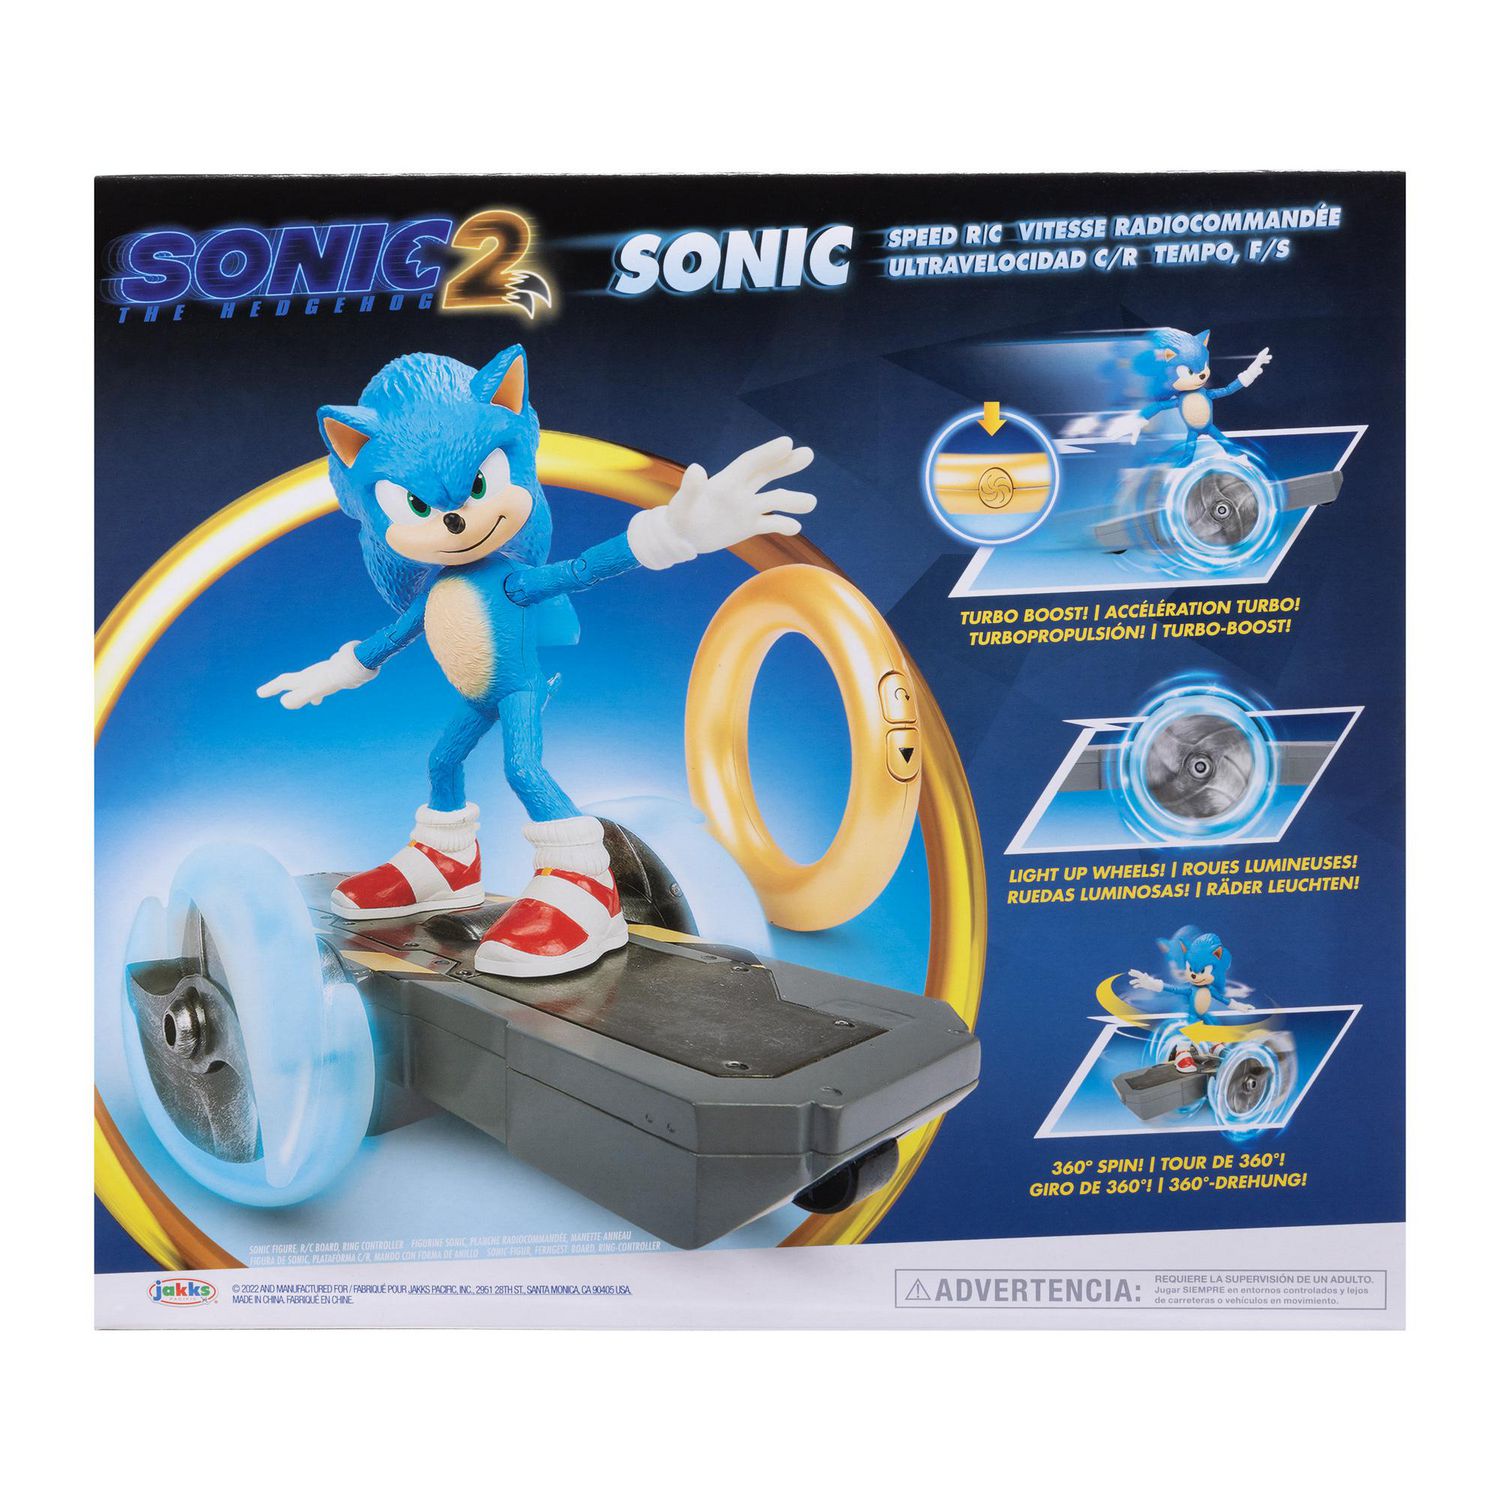 Sonic the Hedgehog 2 Sonic Speed R/C